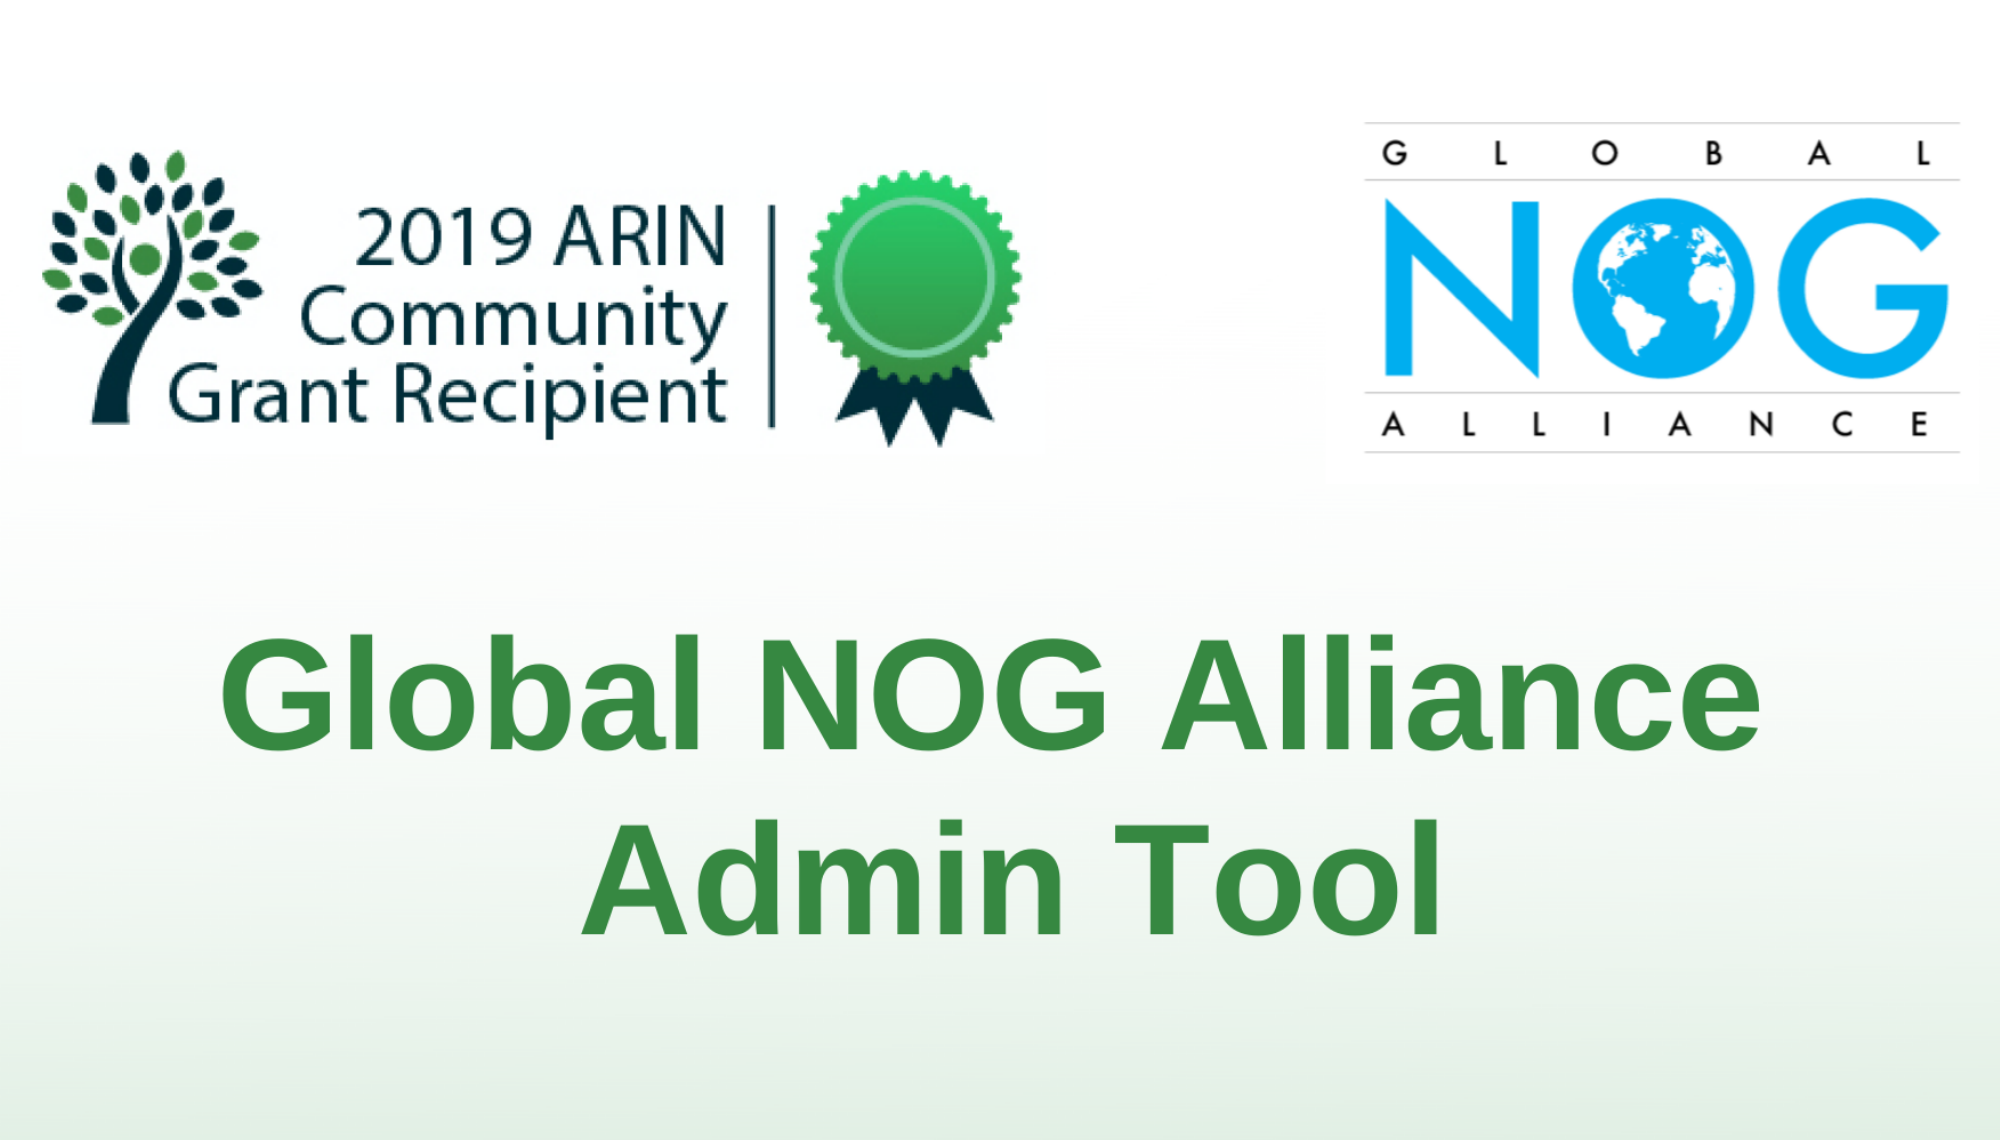 Global NOG Alliance Admin Tool